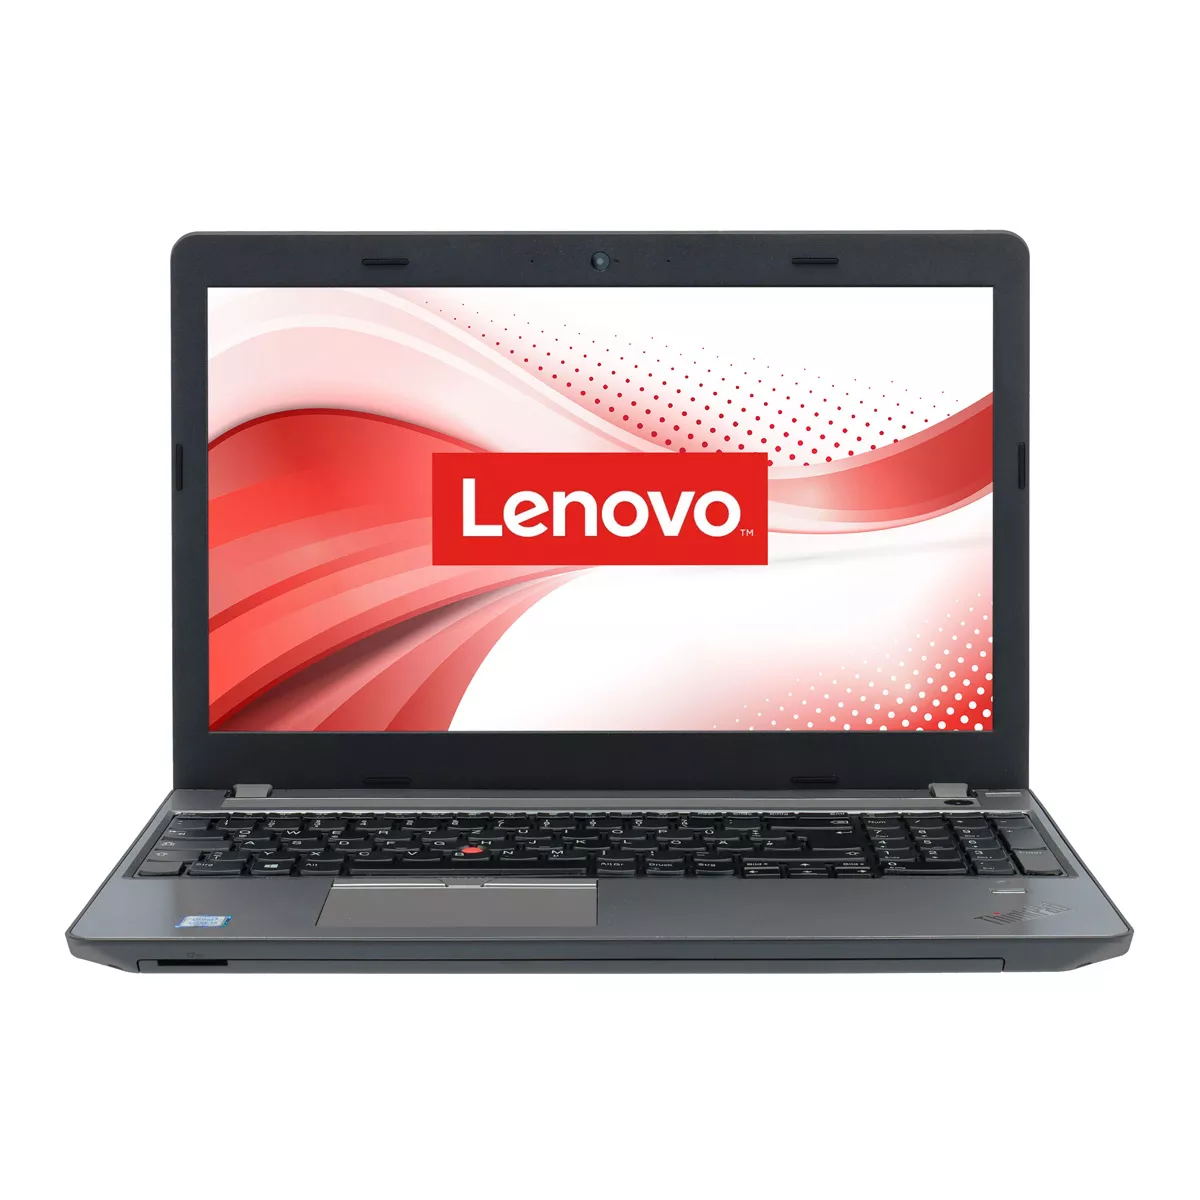 Lenovo ThinkPad E570 Core i5 7200U 8 GB 240 GB M.2 SSD Webcam A